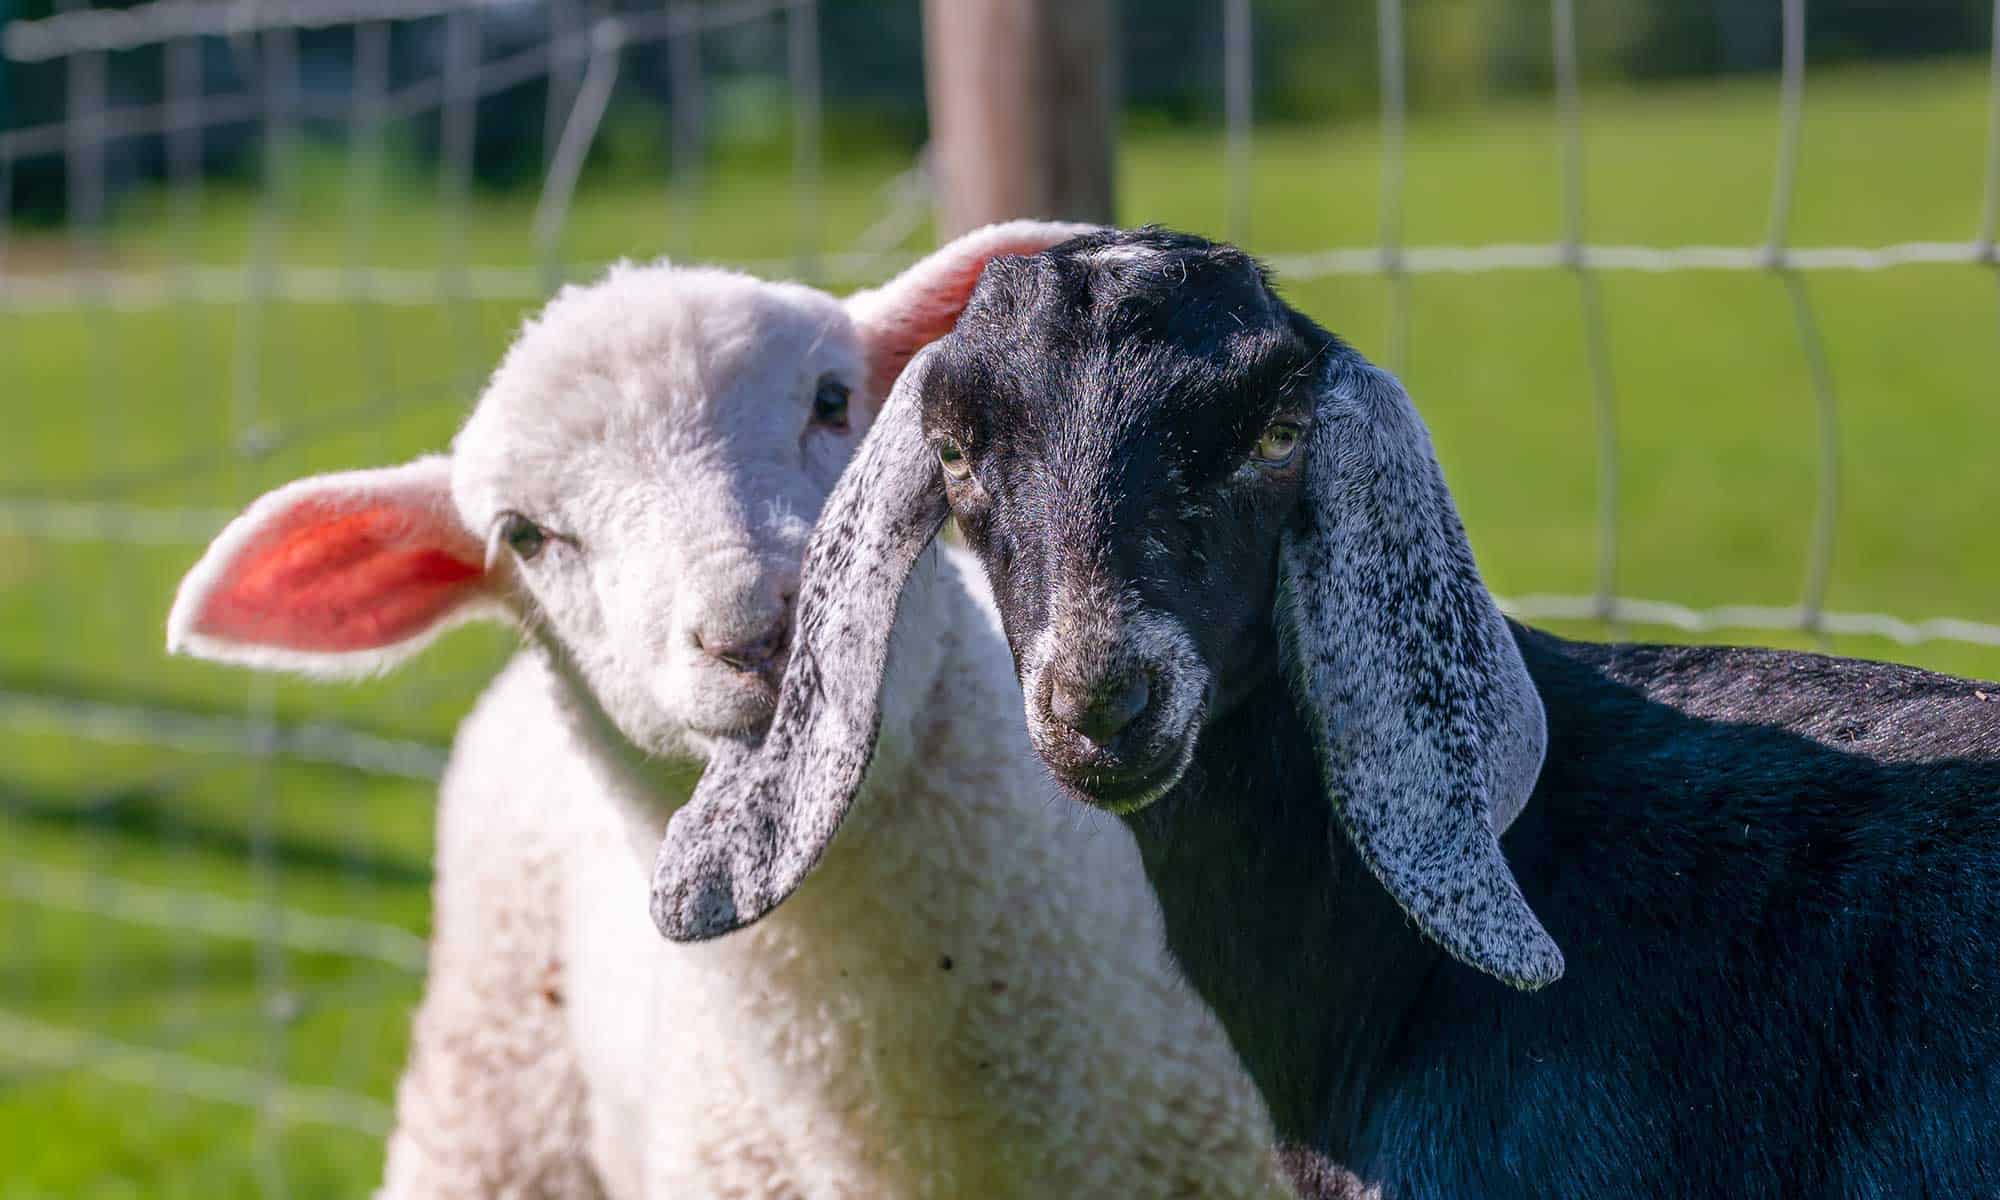 A pair of goats